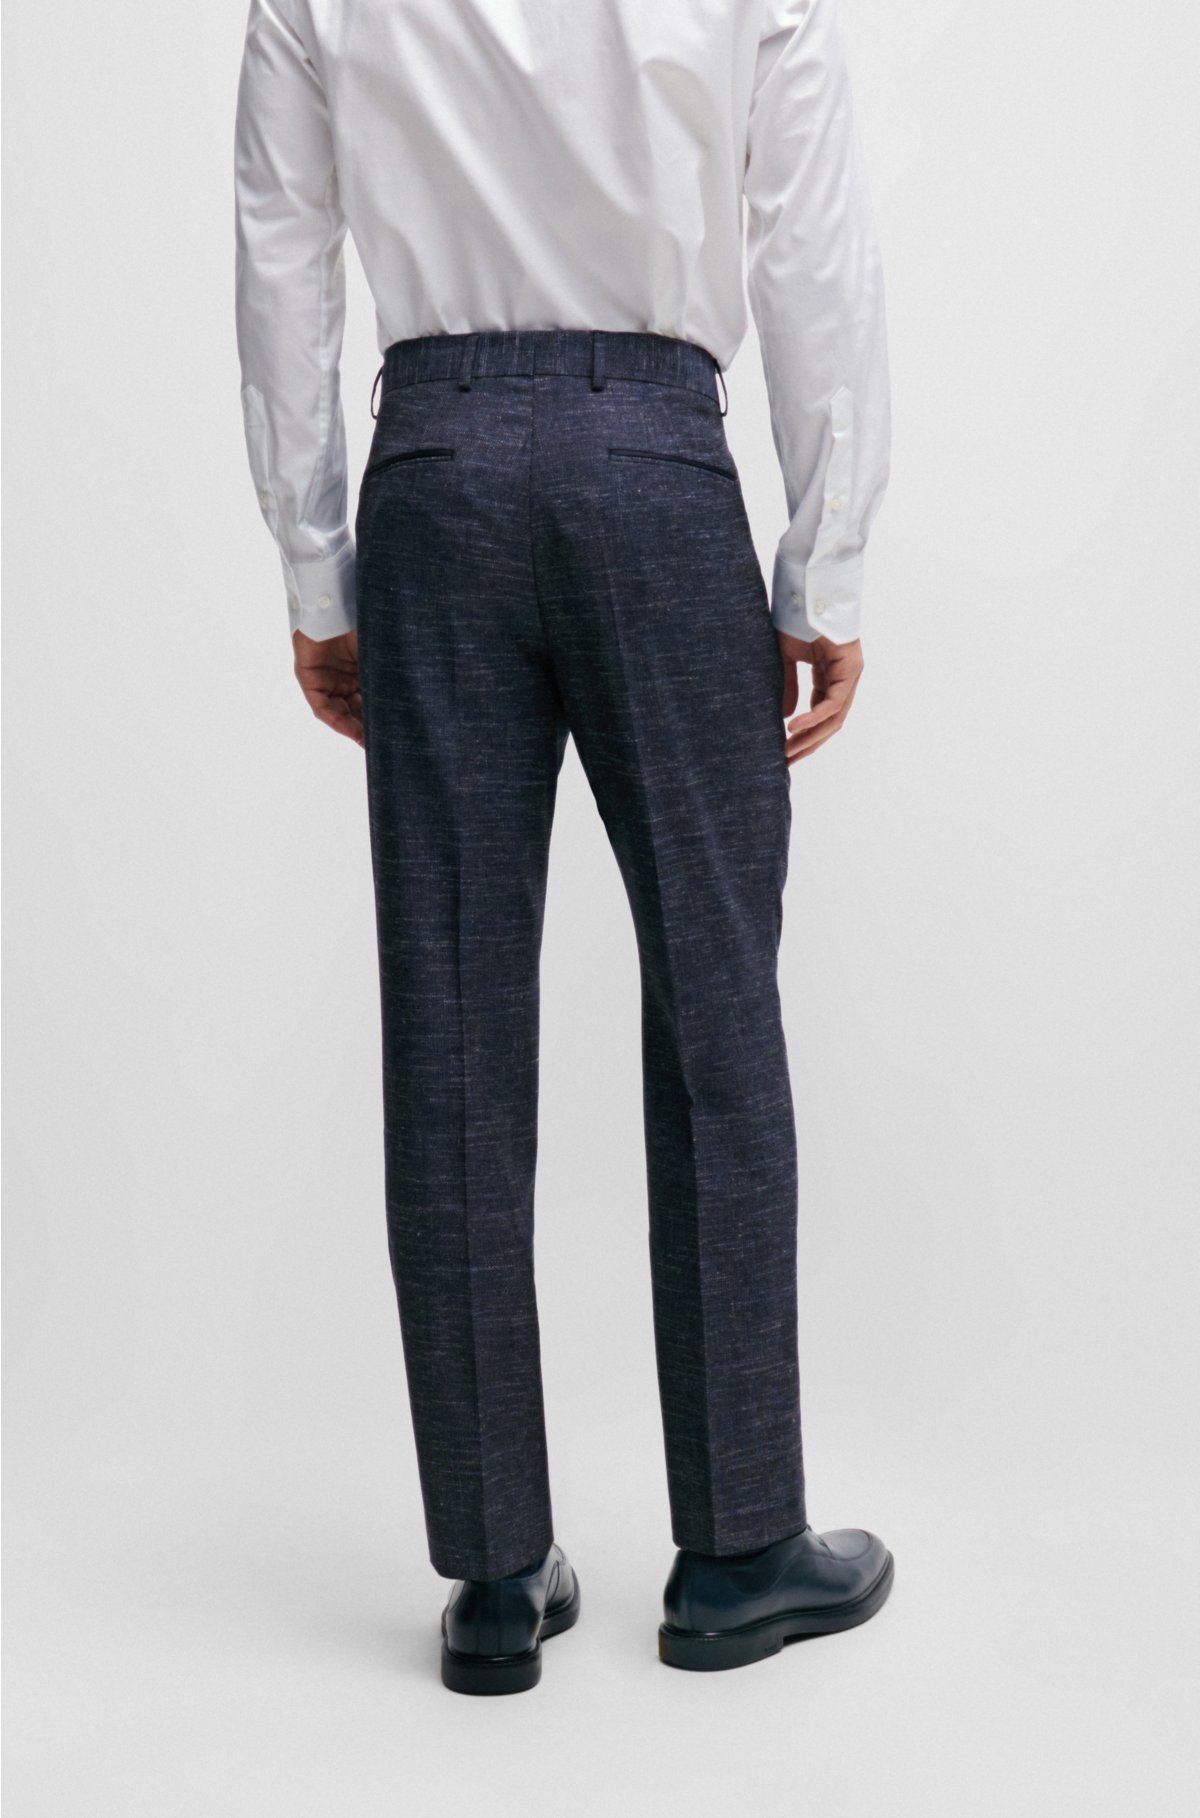 Slim-fit trousers in a patterned wool blend, Dark Blue